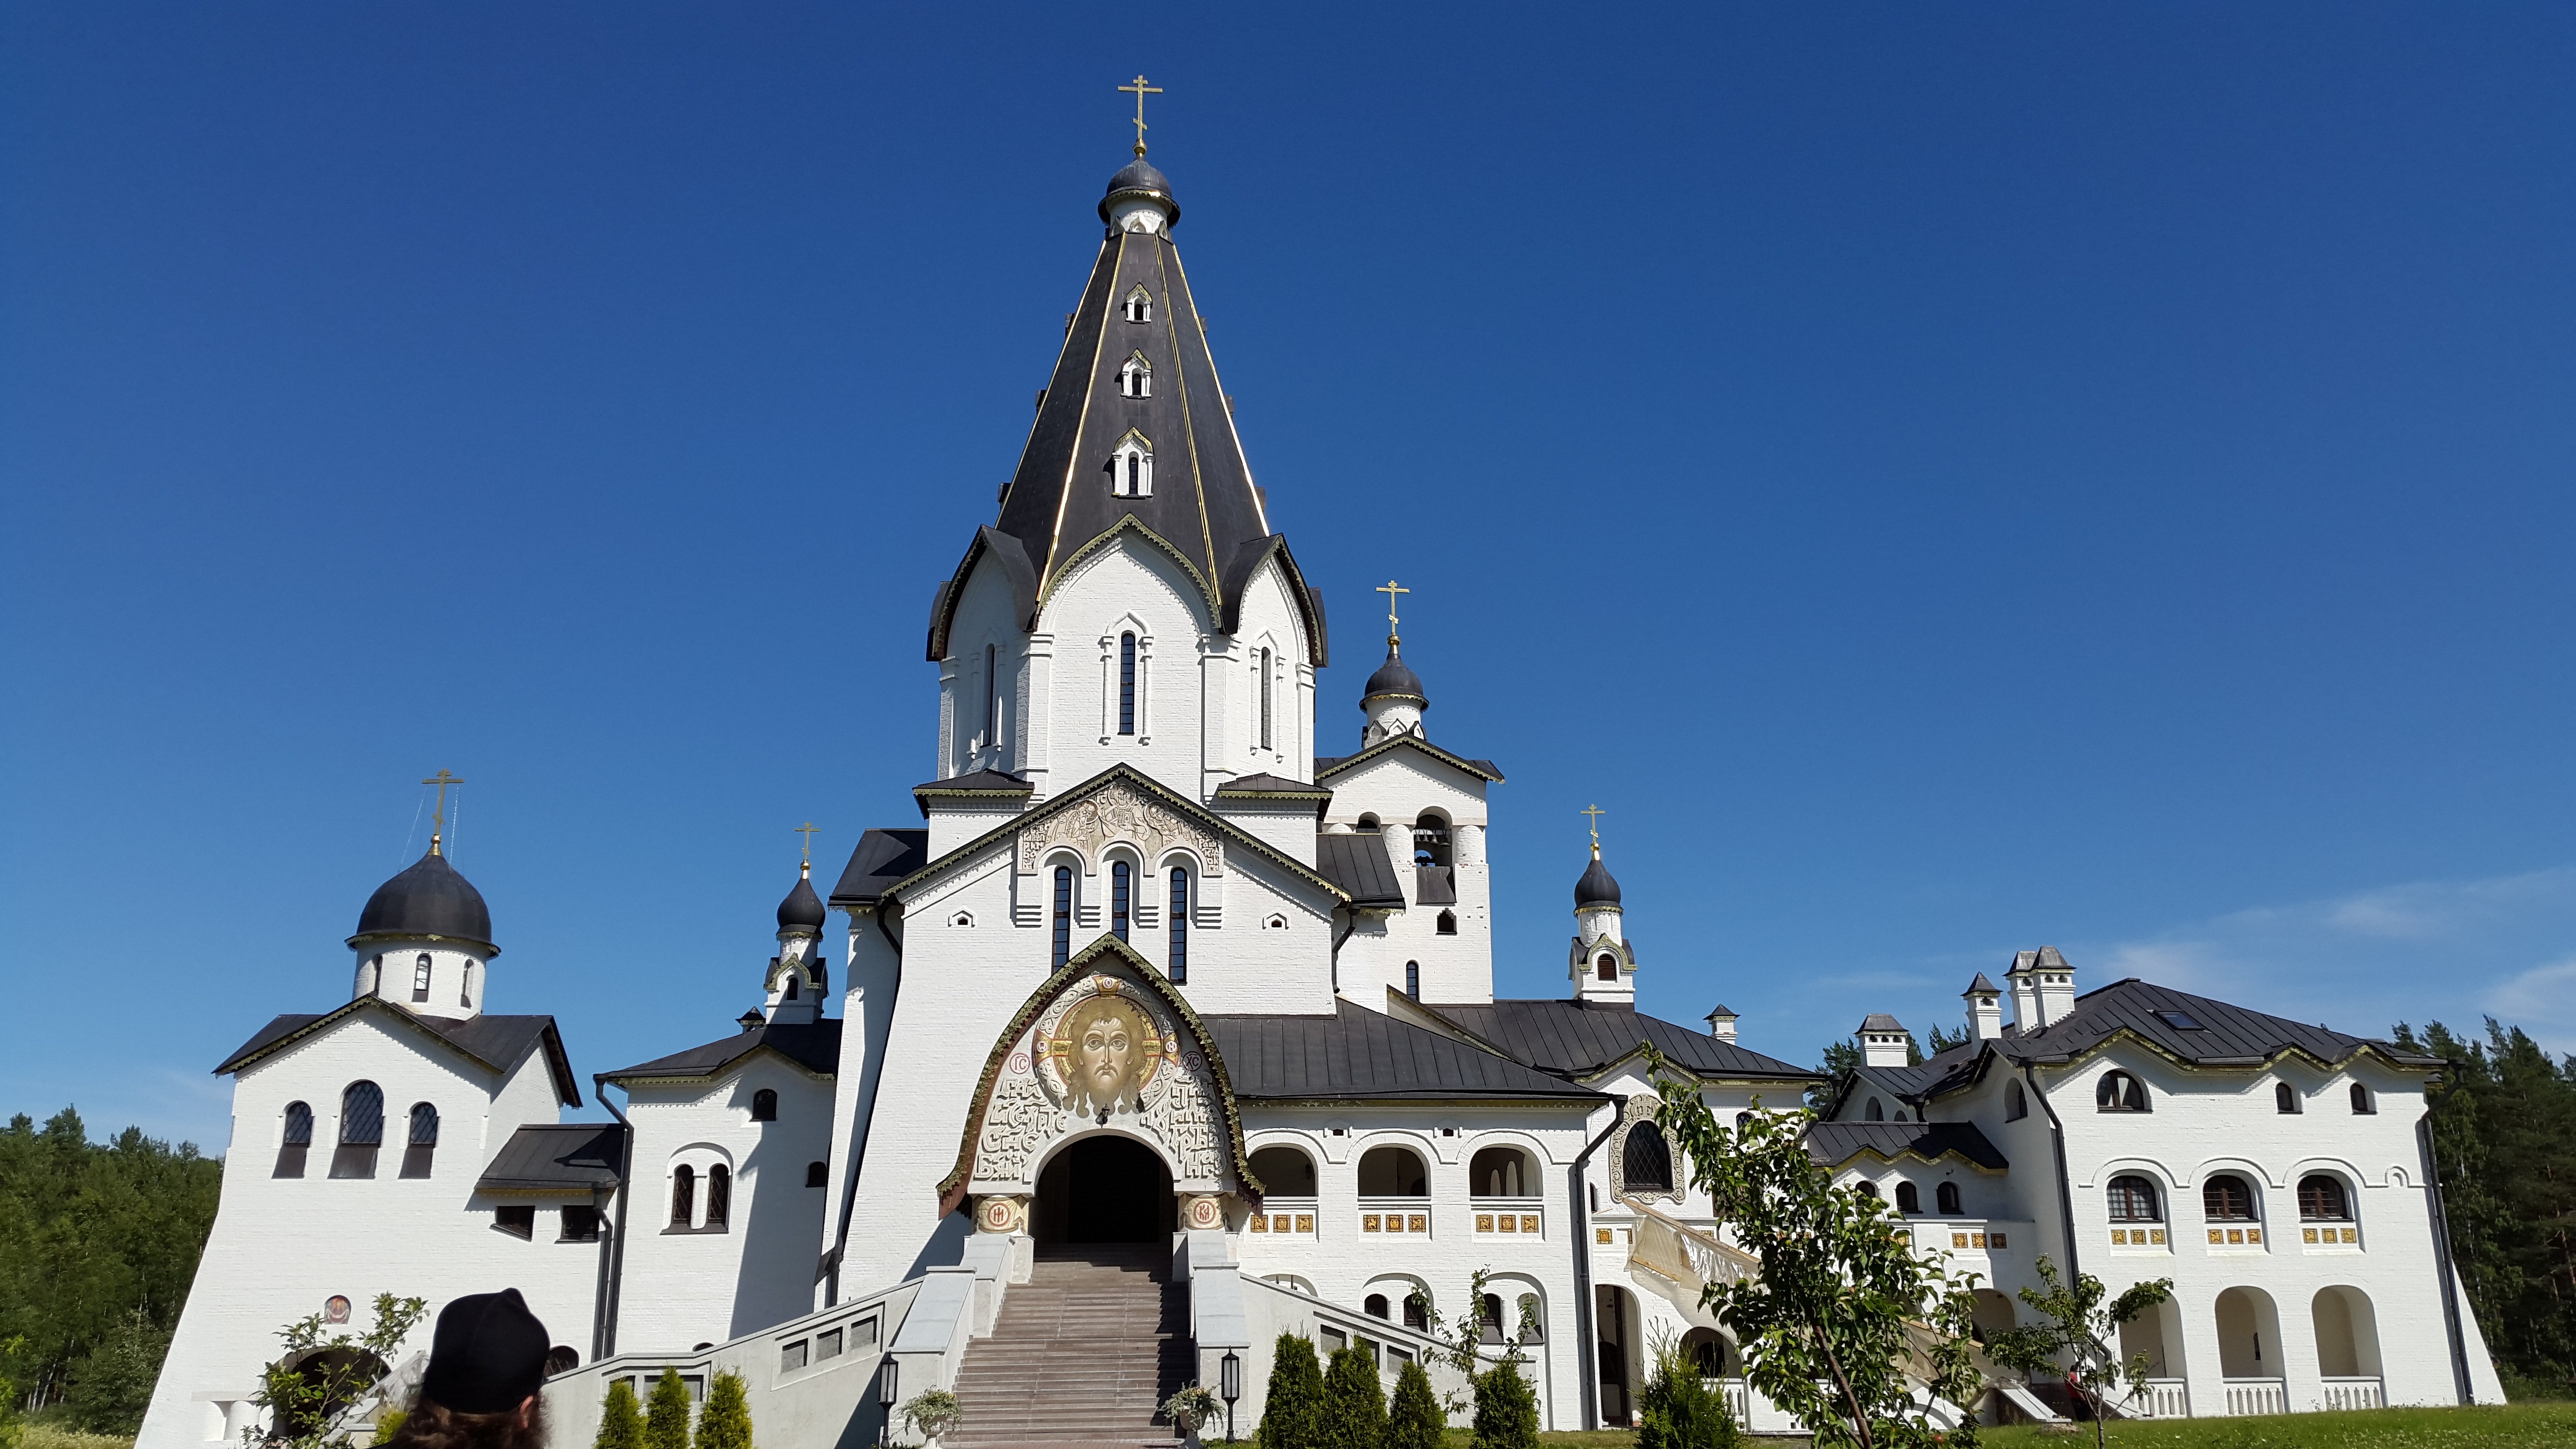 Small Monastery dedicated to St Vladimir, commissioned by President Vladimir Putin, Valaam, Russia